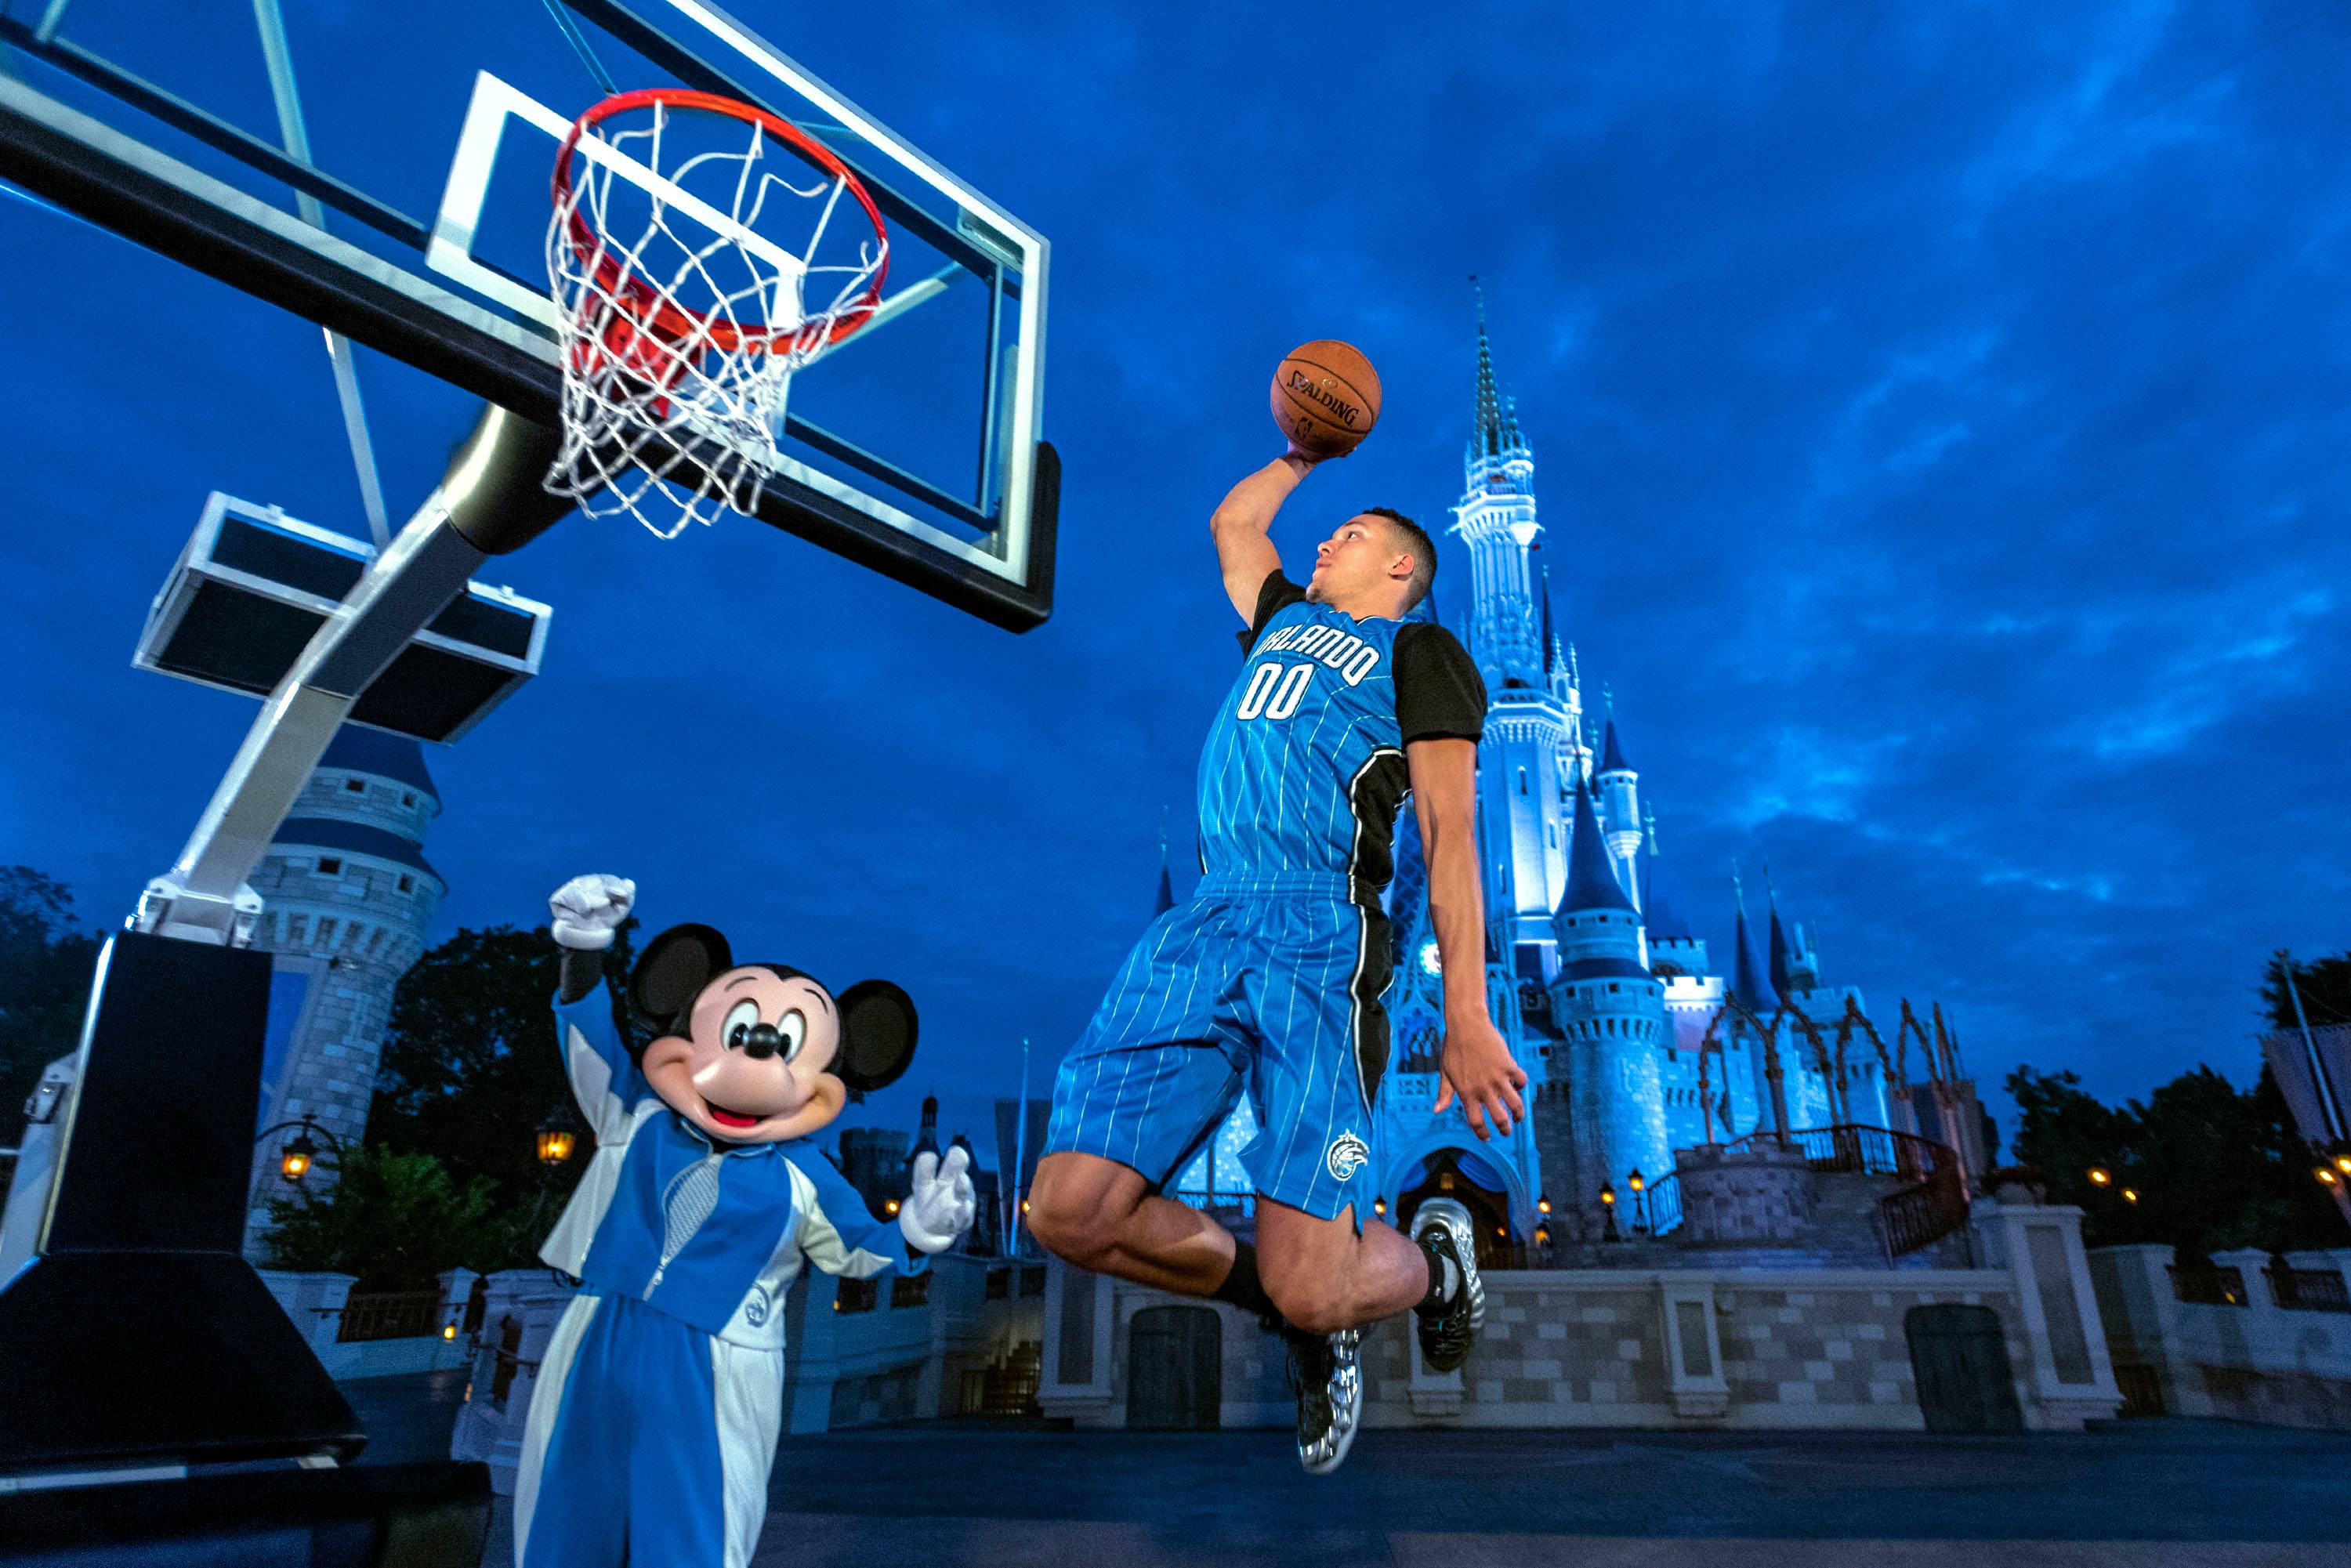 Walt Disney World extends their sponsorship of Orlando Magic